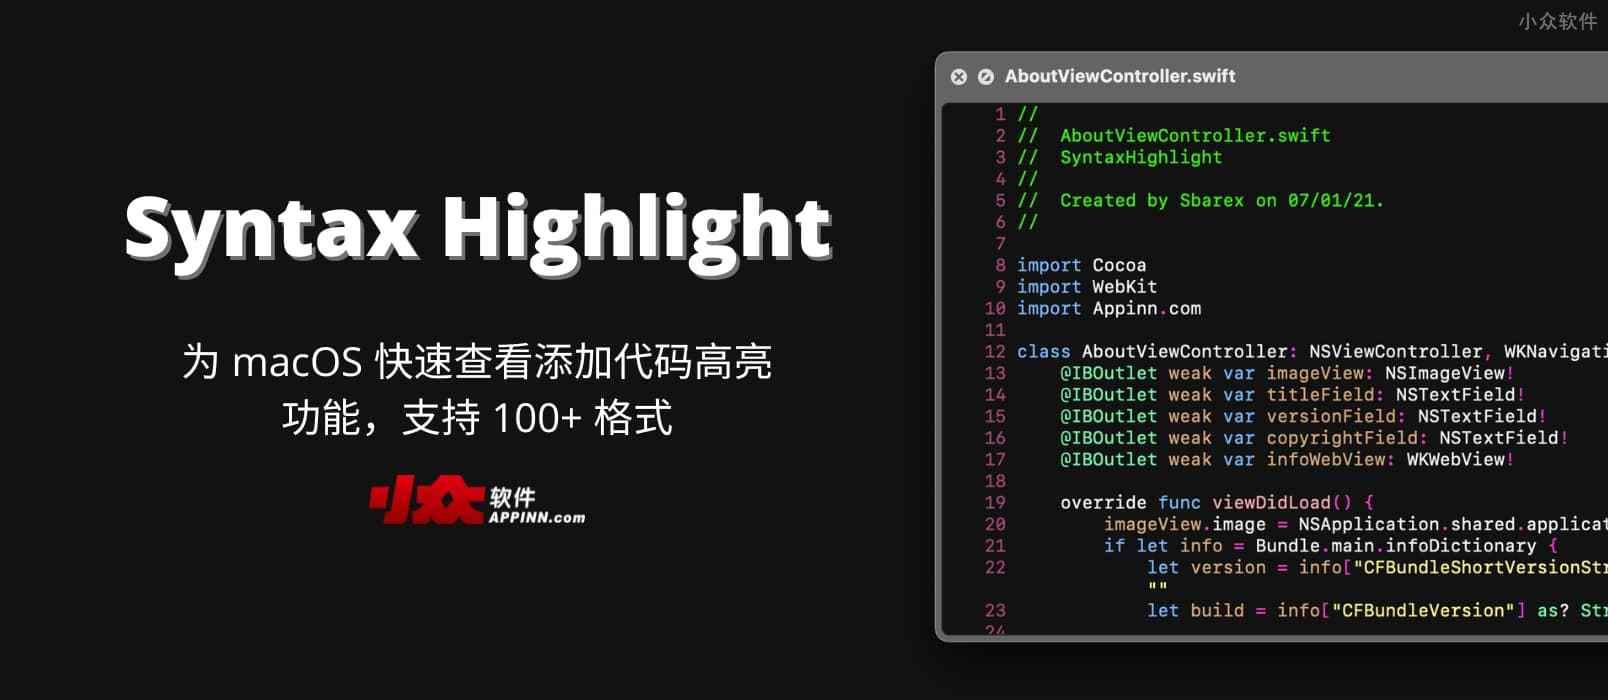 Syntax Highlight – 为 macOS 快速查看添加代码高亮功能，支持 100+ 格式